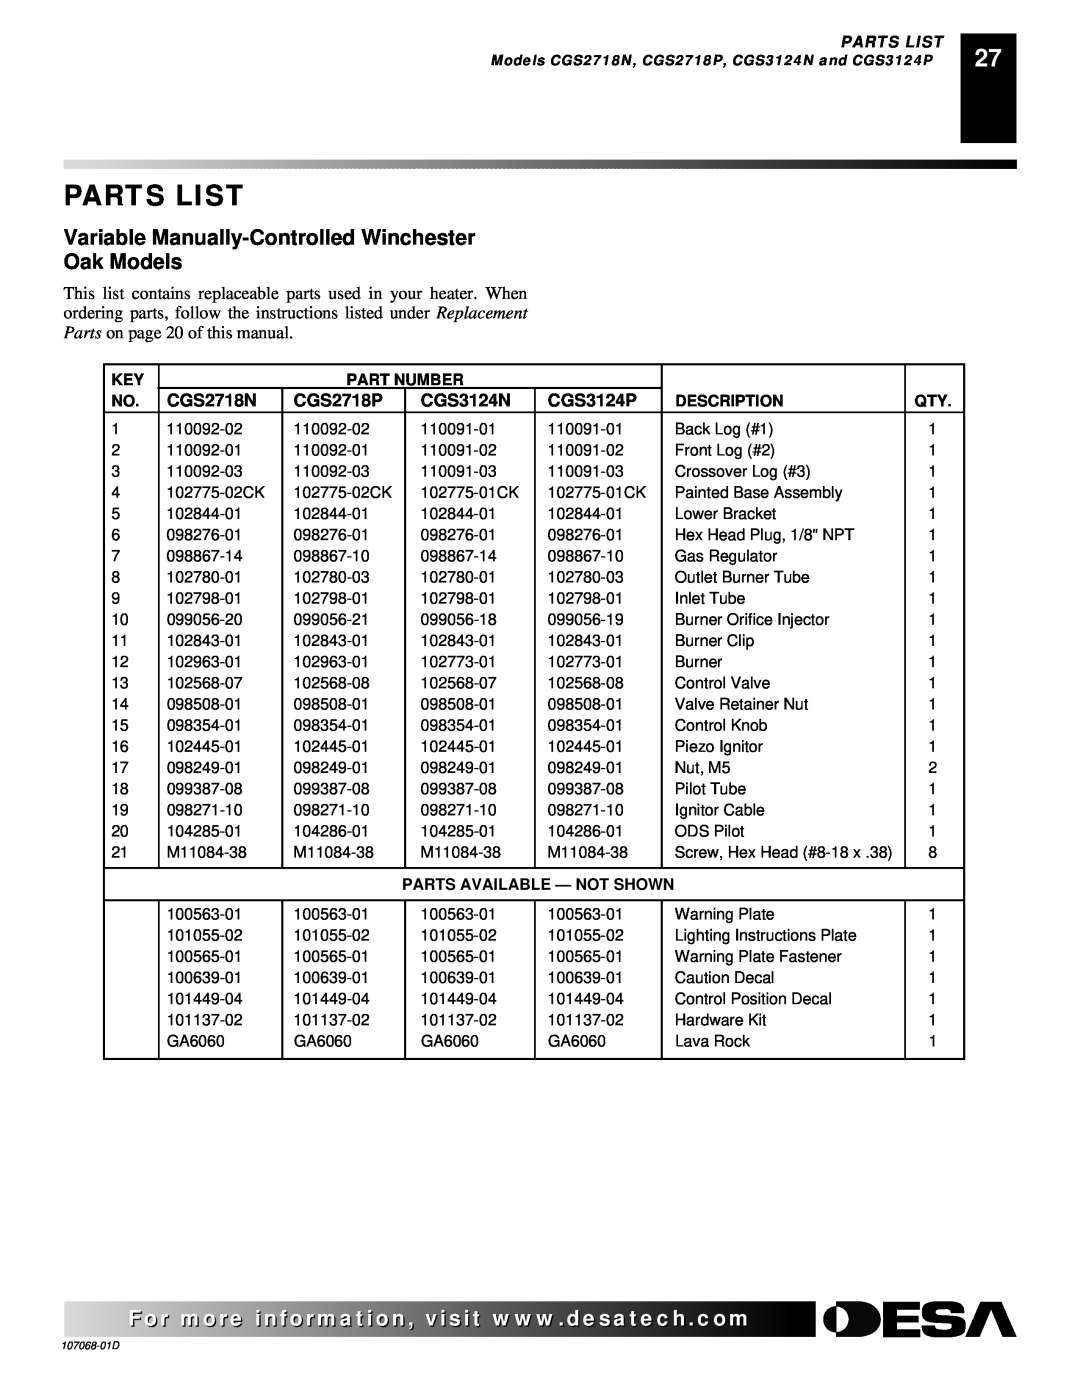 Desa CGS3124P installation manual Parts List, Variable Manually-ControlledWinchester Oak Models, Part Number, Description 